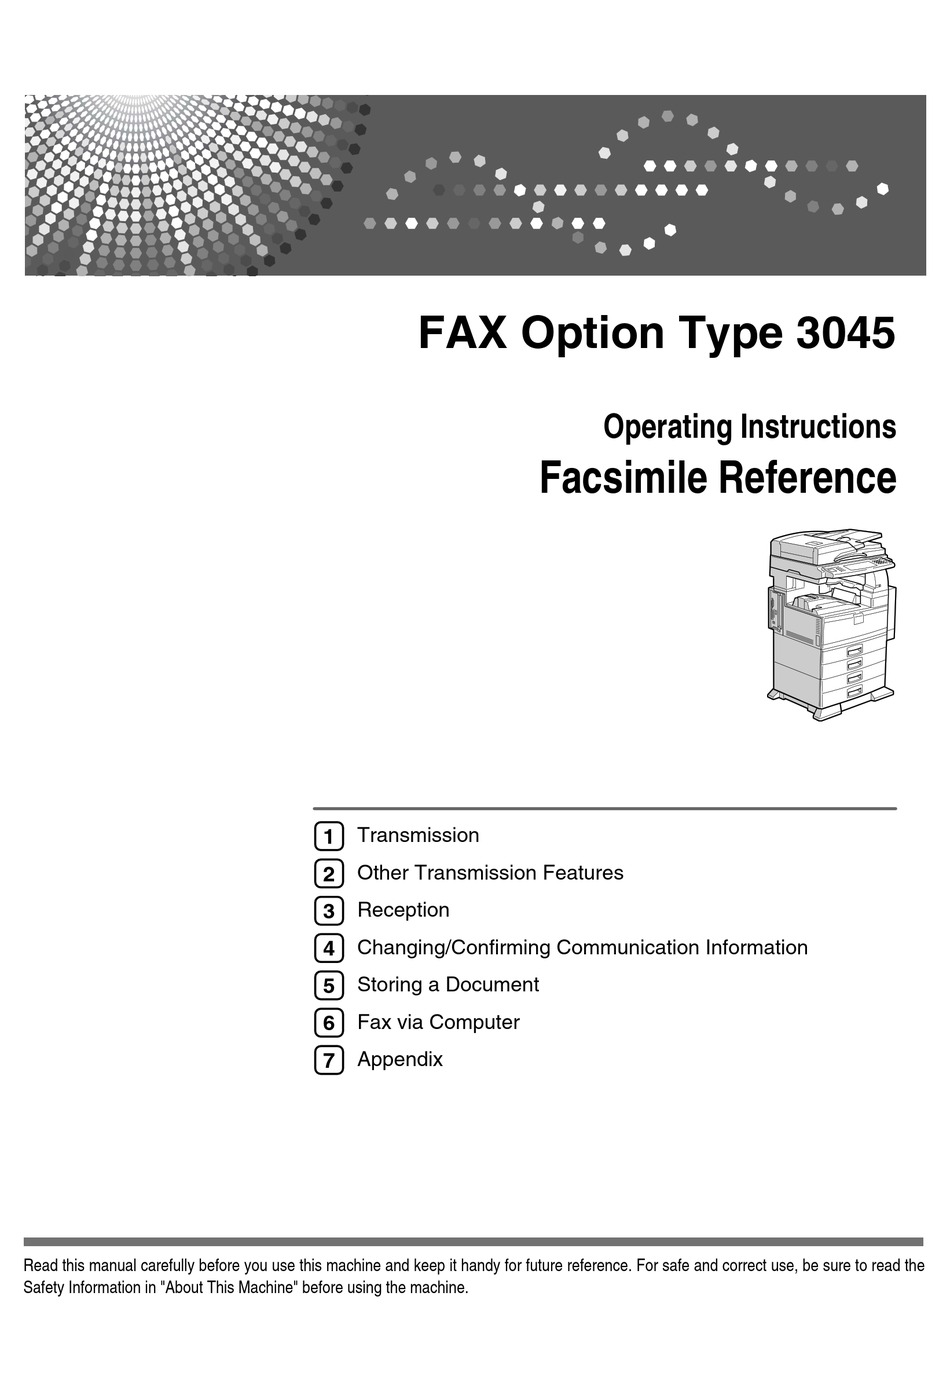 ricoh-3045-facsimile-reference-manual-pdf-download-manualslib